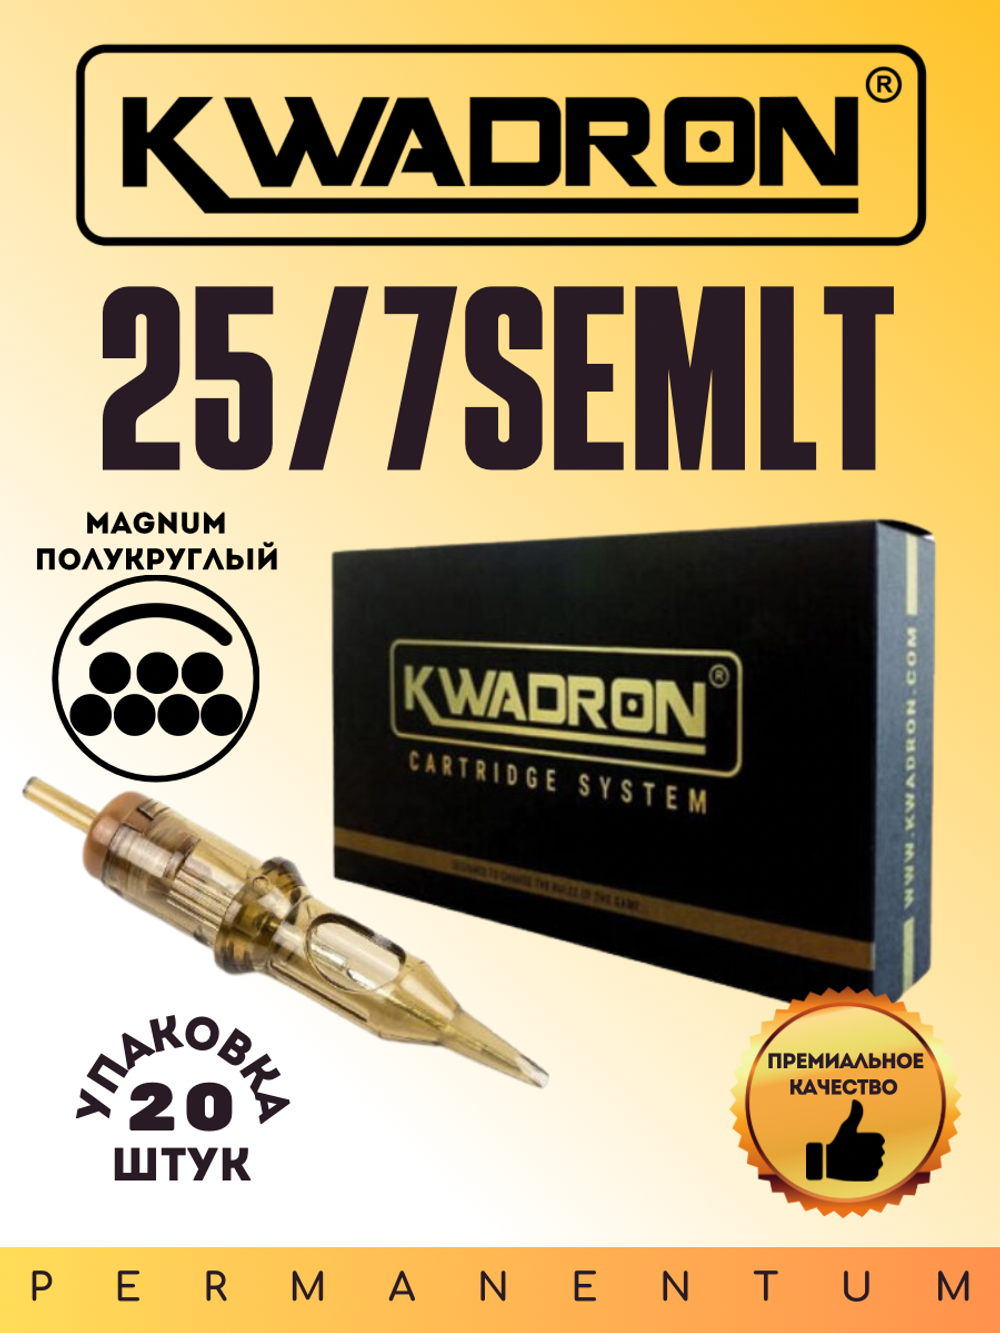 Картридж для татуажа "KWADRON Soft Edge Magnum 25/7SEMLT" упаковка 20 шт.